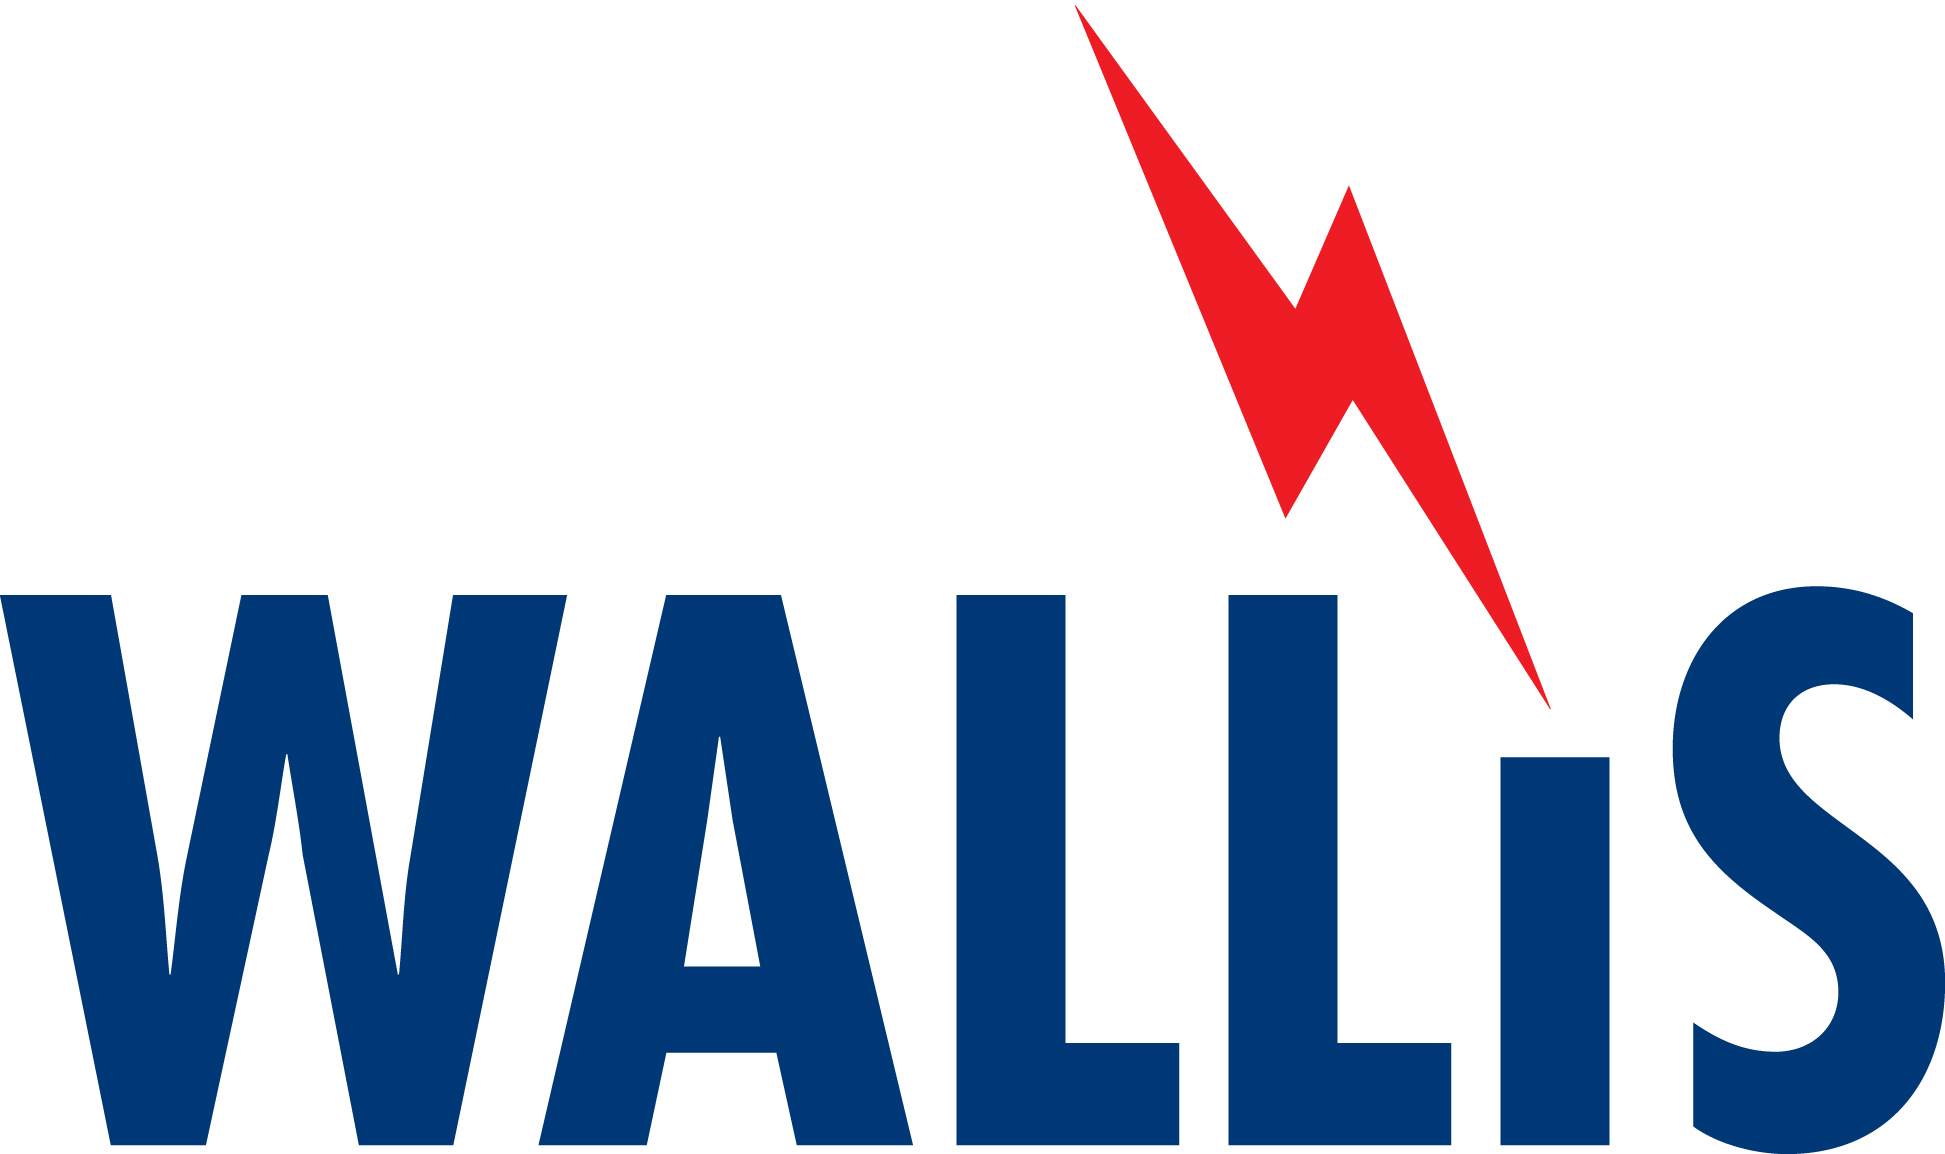 A.N. Wallis & Co. Ltd